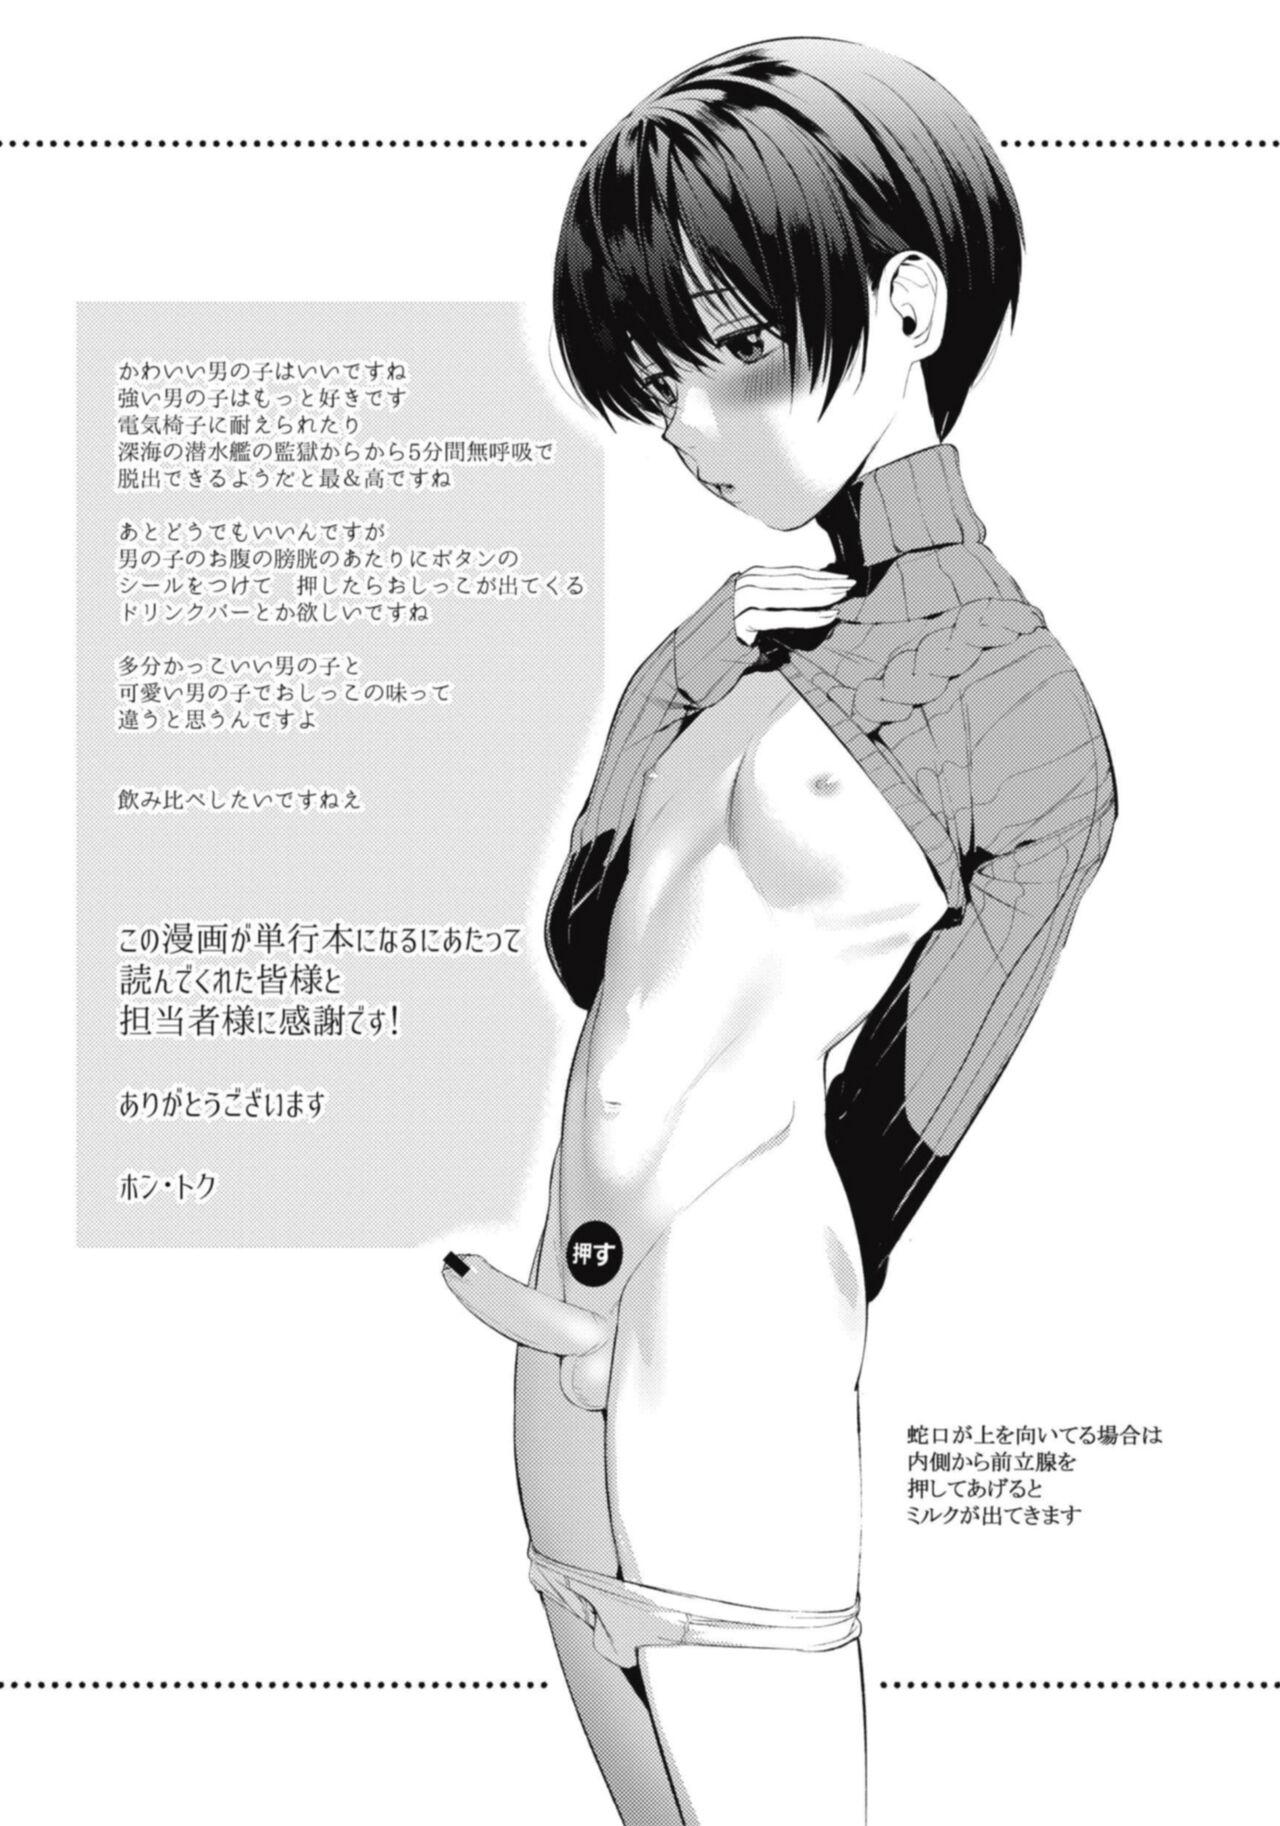 Blowjob Hentai Shounen Kyoukasho - HENTAI BOYS SCHOOLBOOK Free Amatuer Porn - Page 179